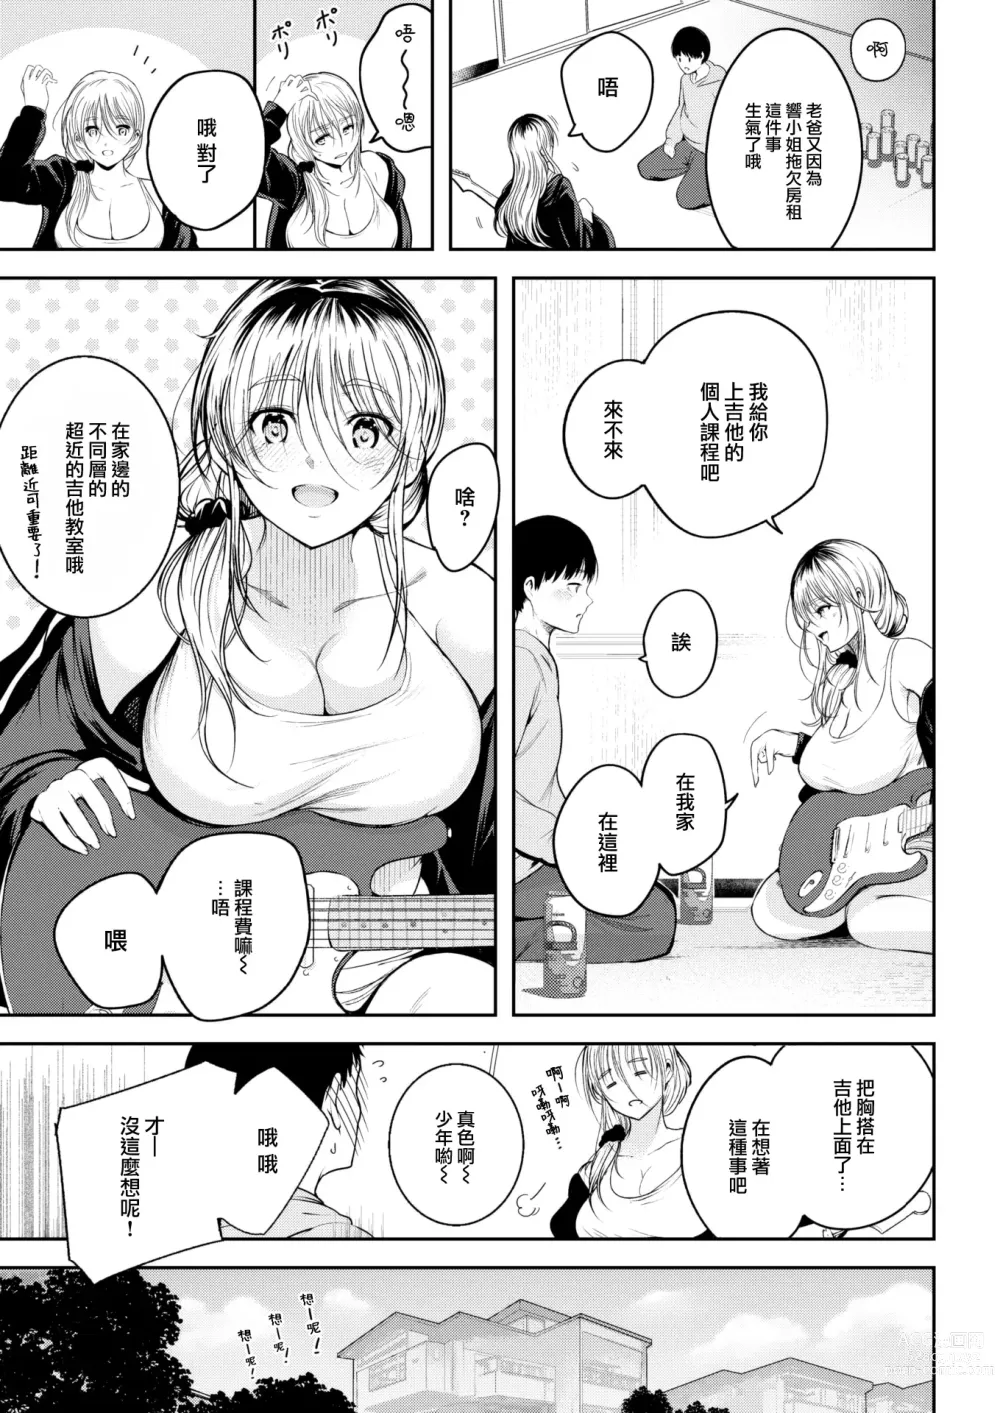 Page 6 of manga RAINY DROP